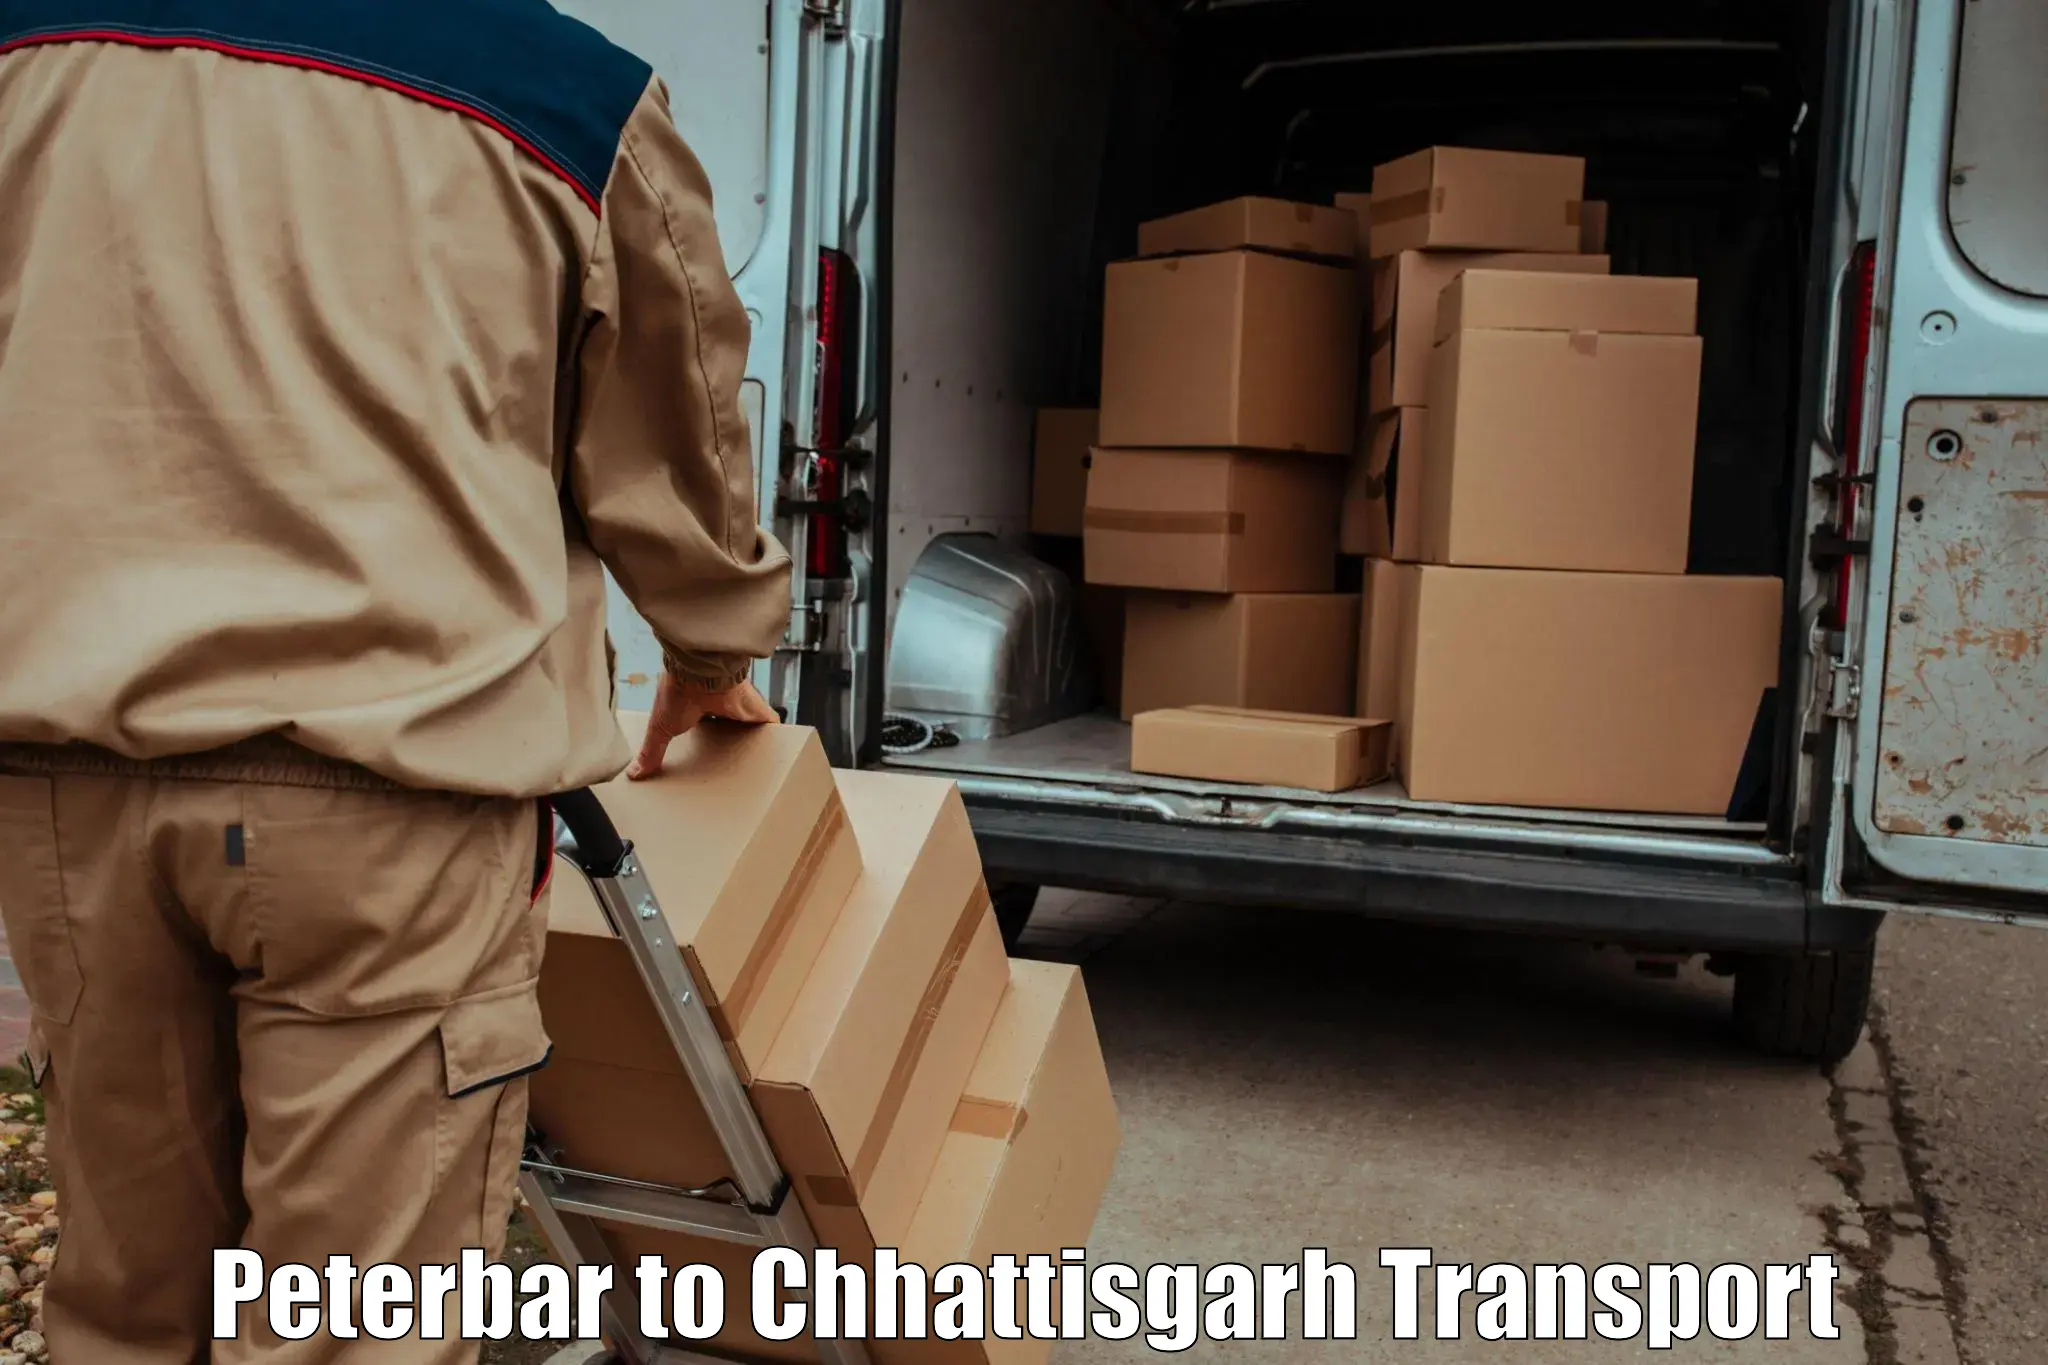 Pick up transport service Peterbar to Korea Chhattisgarh